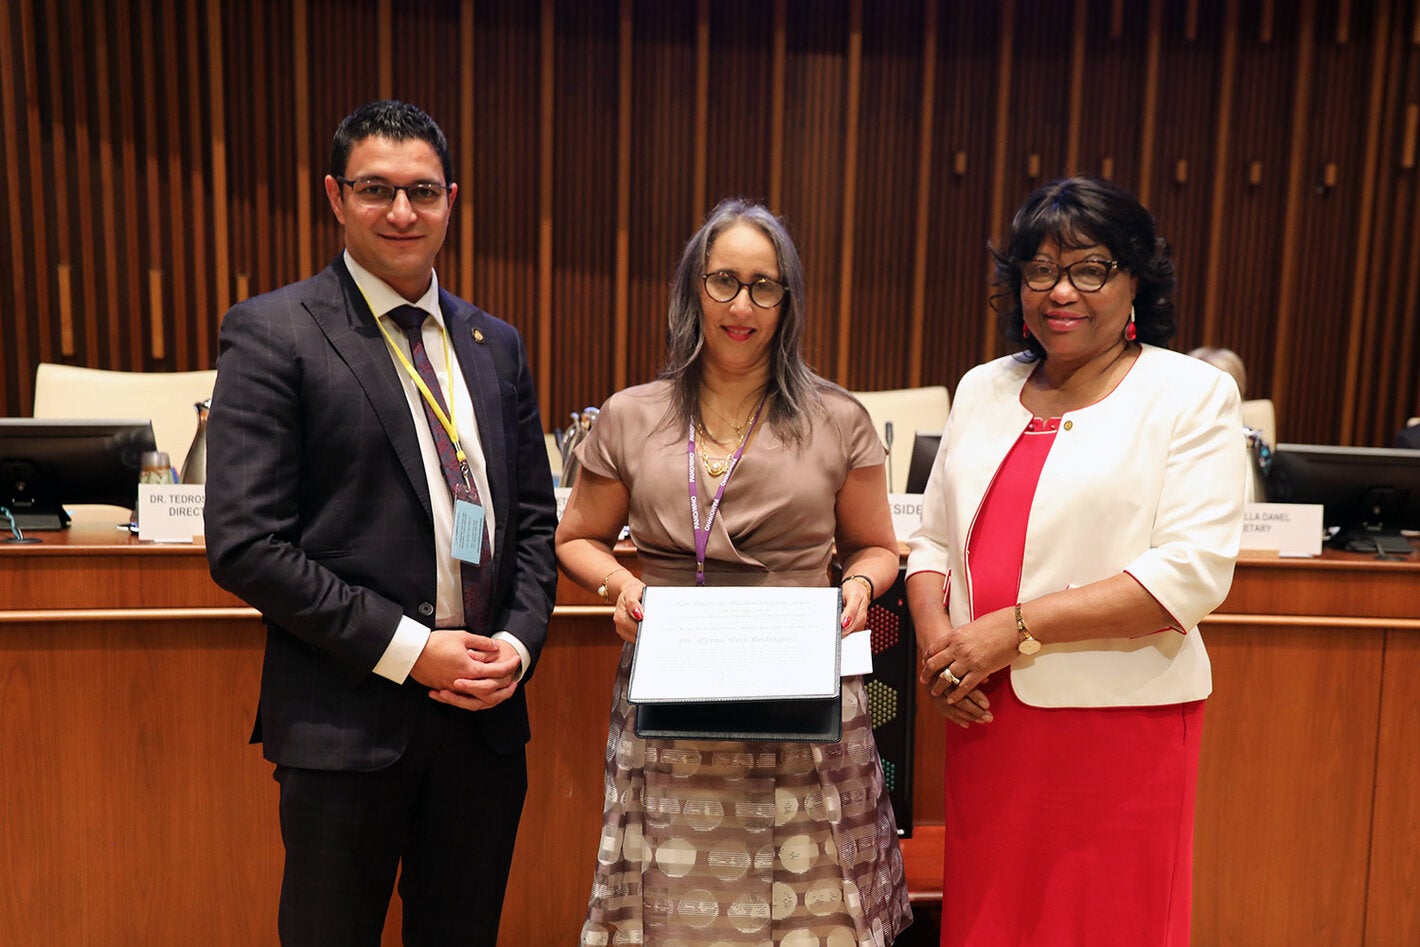  Dr. Reina Roa Rodriguez of Panama accepts her award